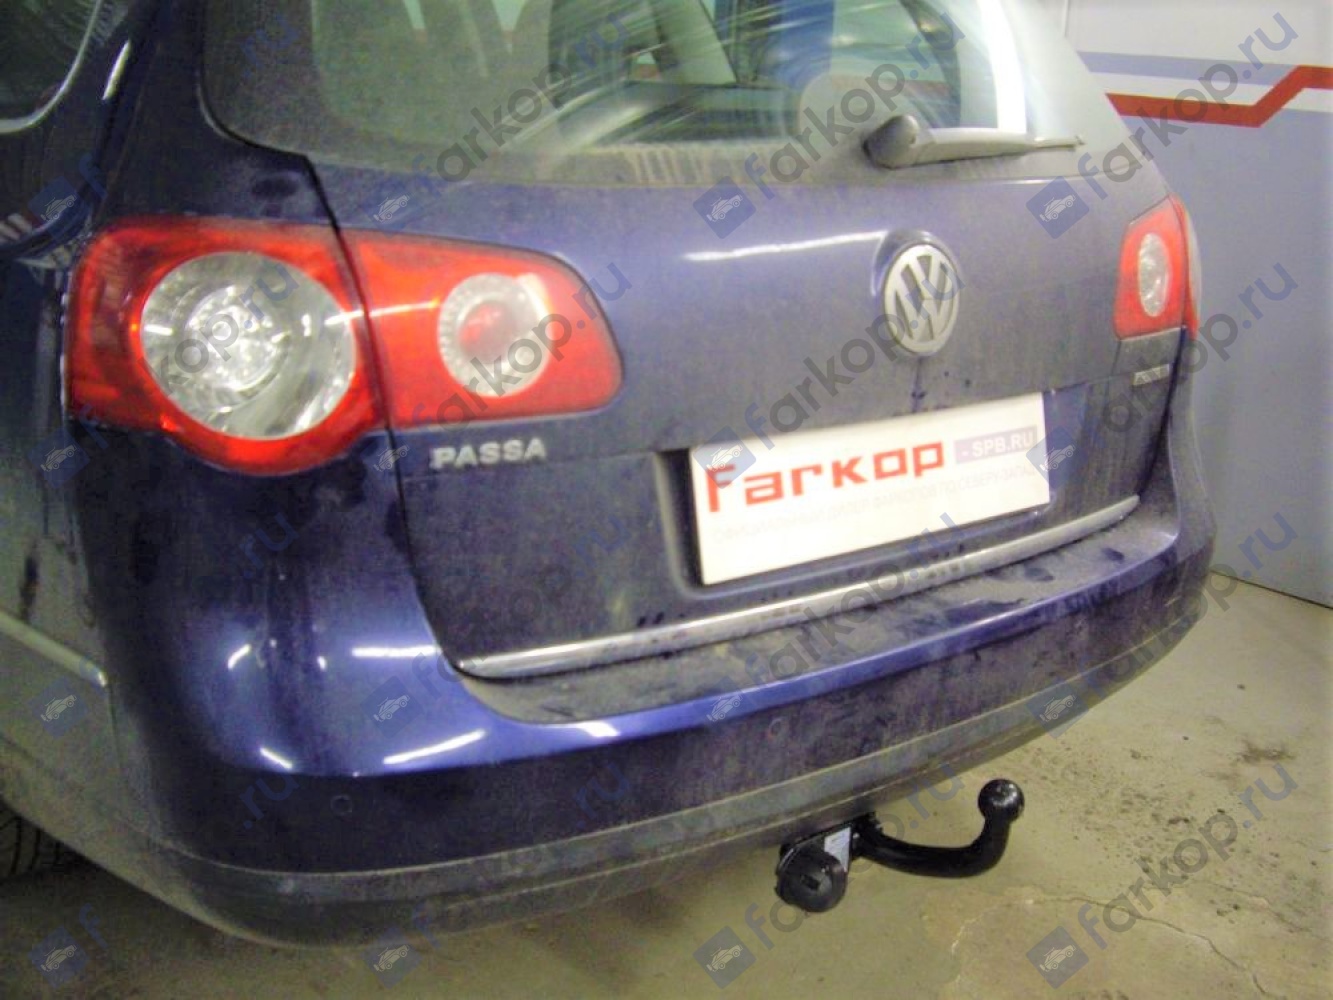 Фаркоп Imiola для Volkswagen Passat (седан, универсал) 2005-2010 W.026 в 